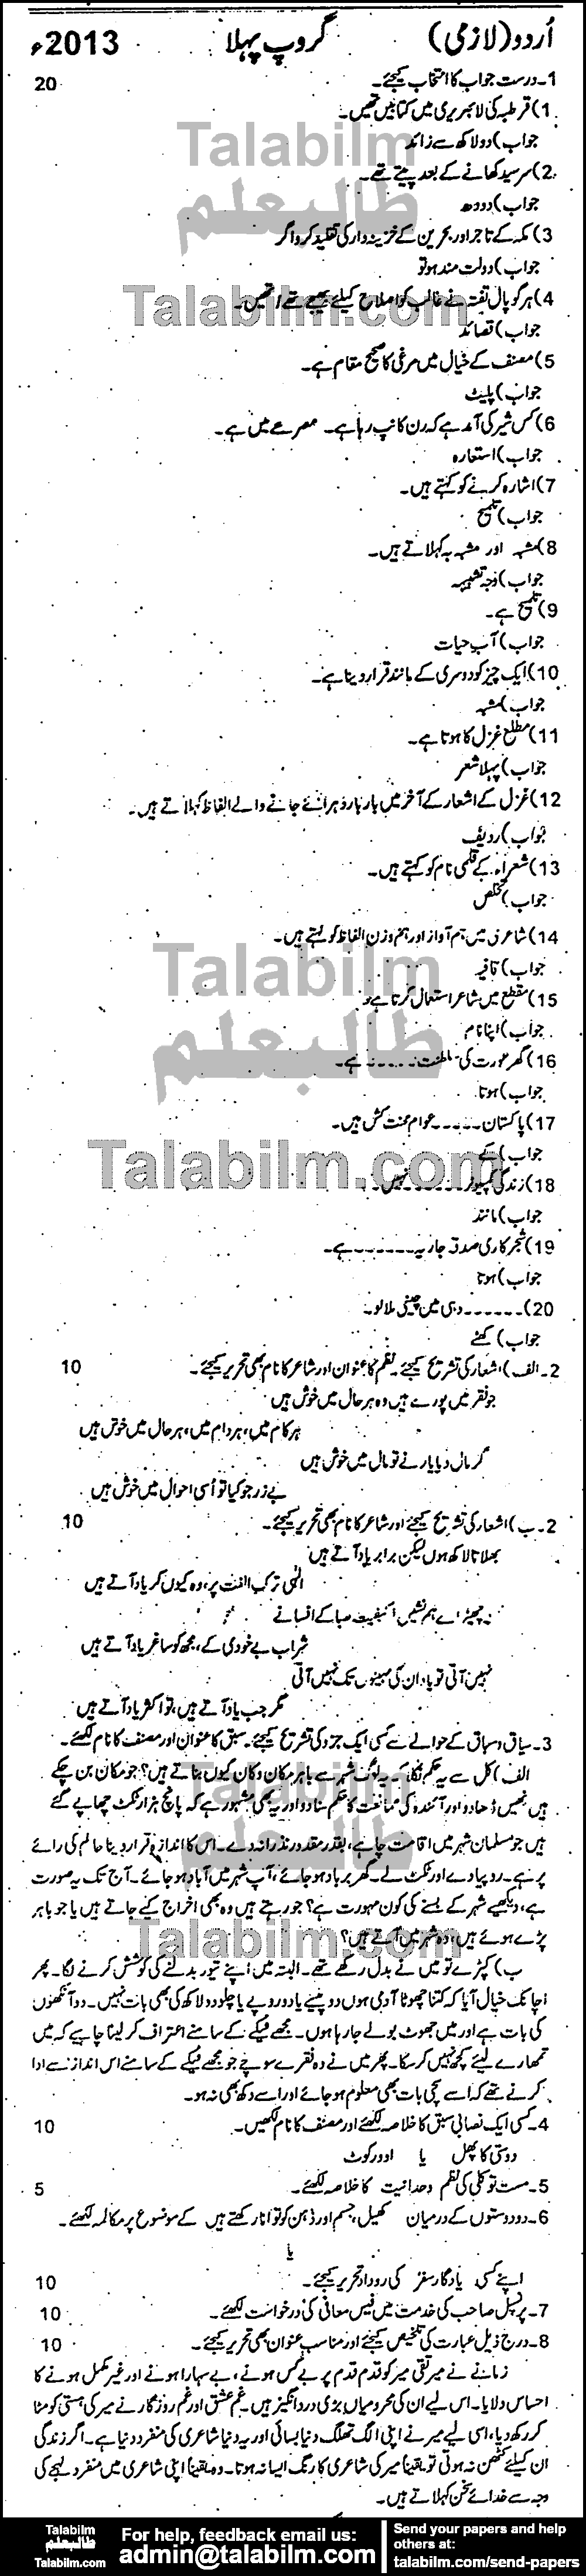 Urdu 0 past paper for Group-I 2013